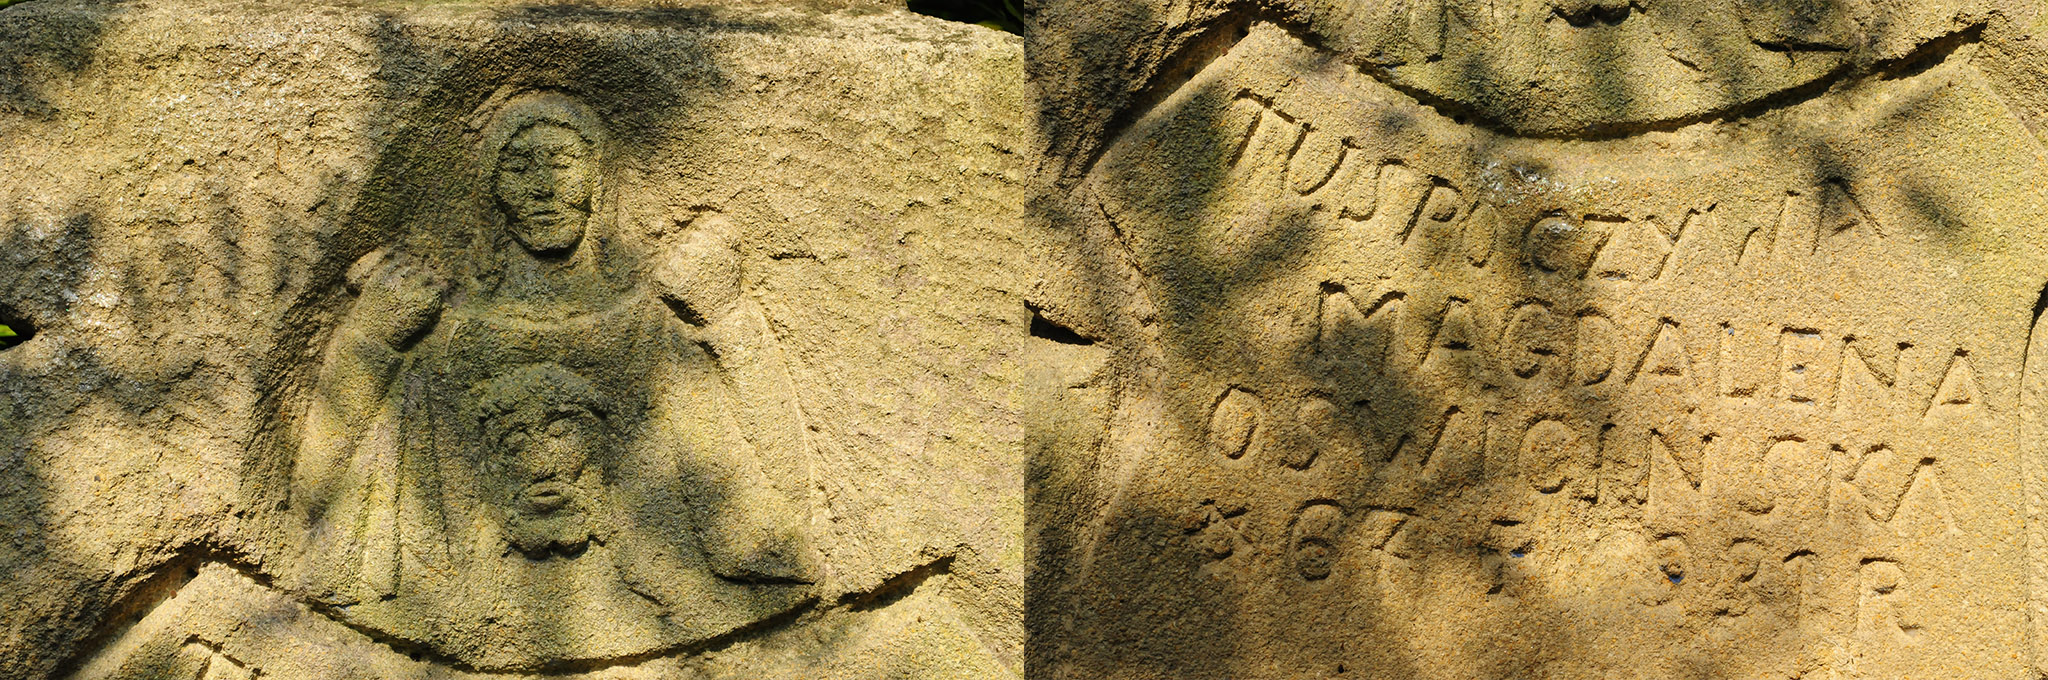 Detail and inscription from the gravestone of Magdalena Oświcińska, cemetery in Celejów